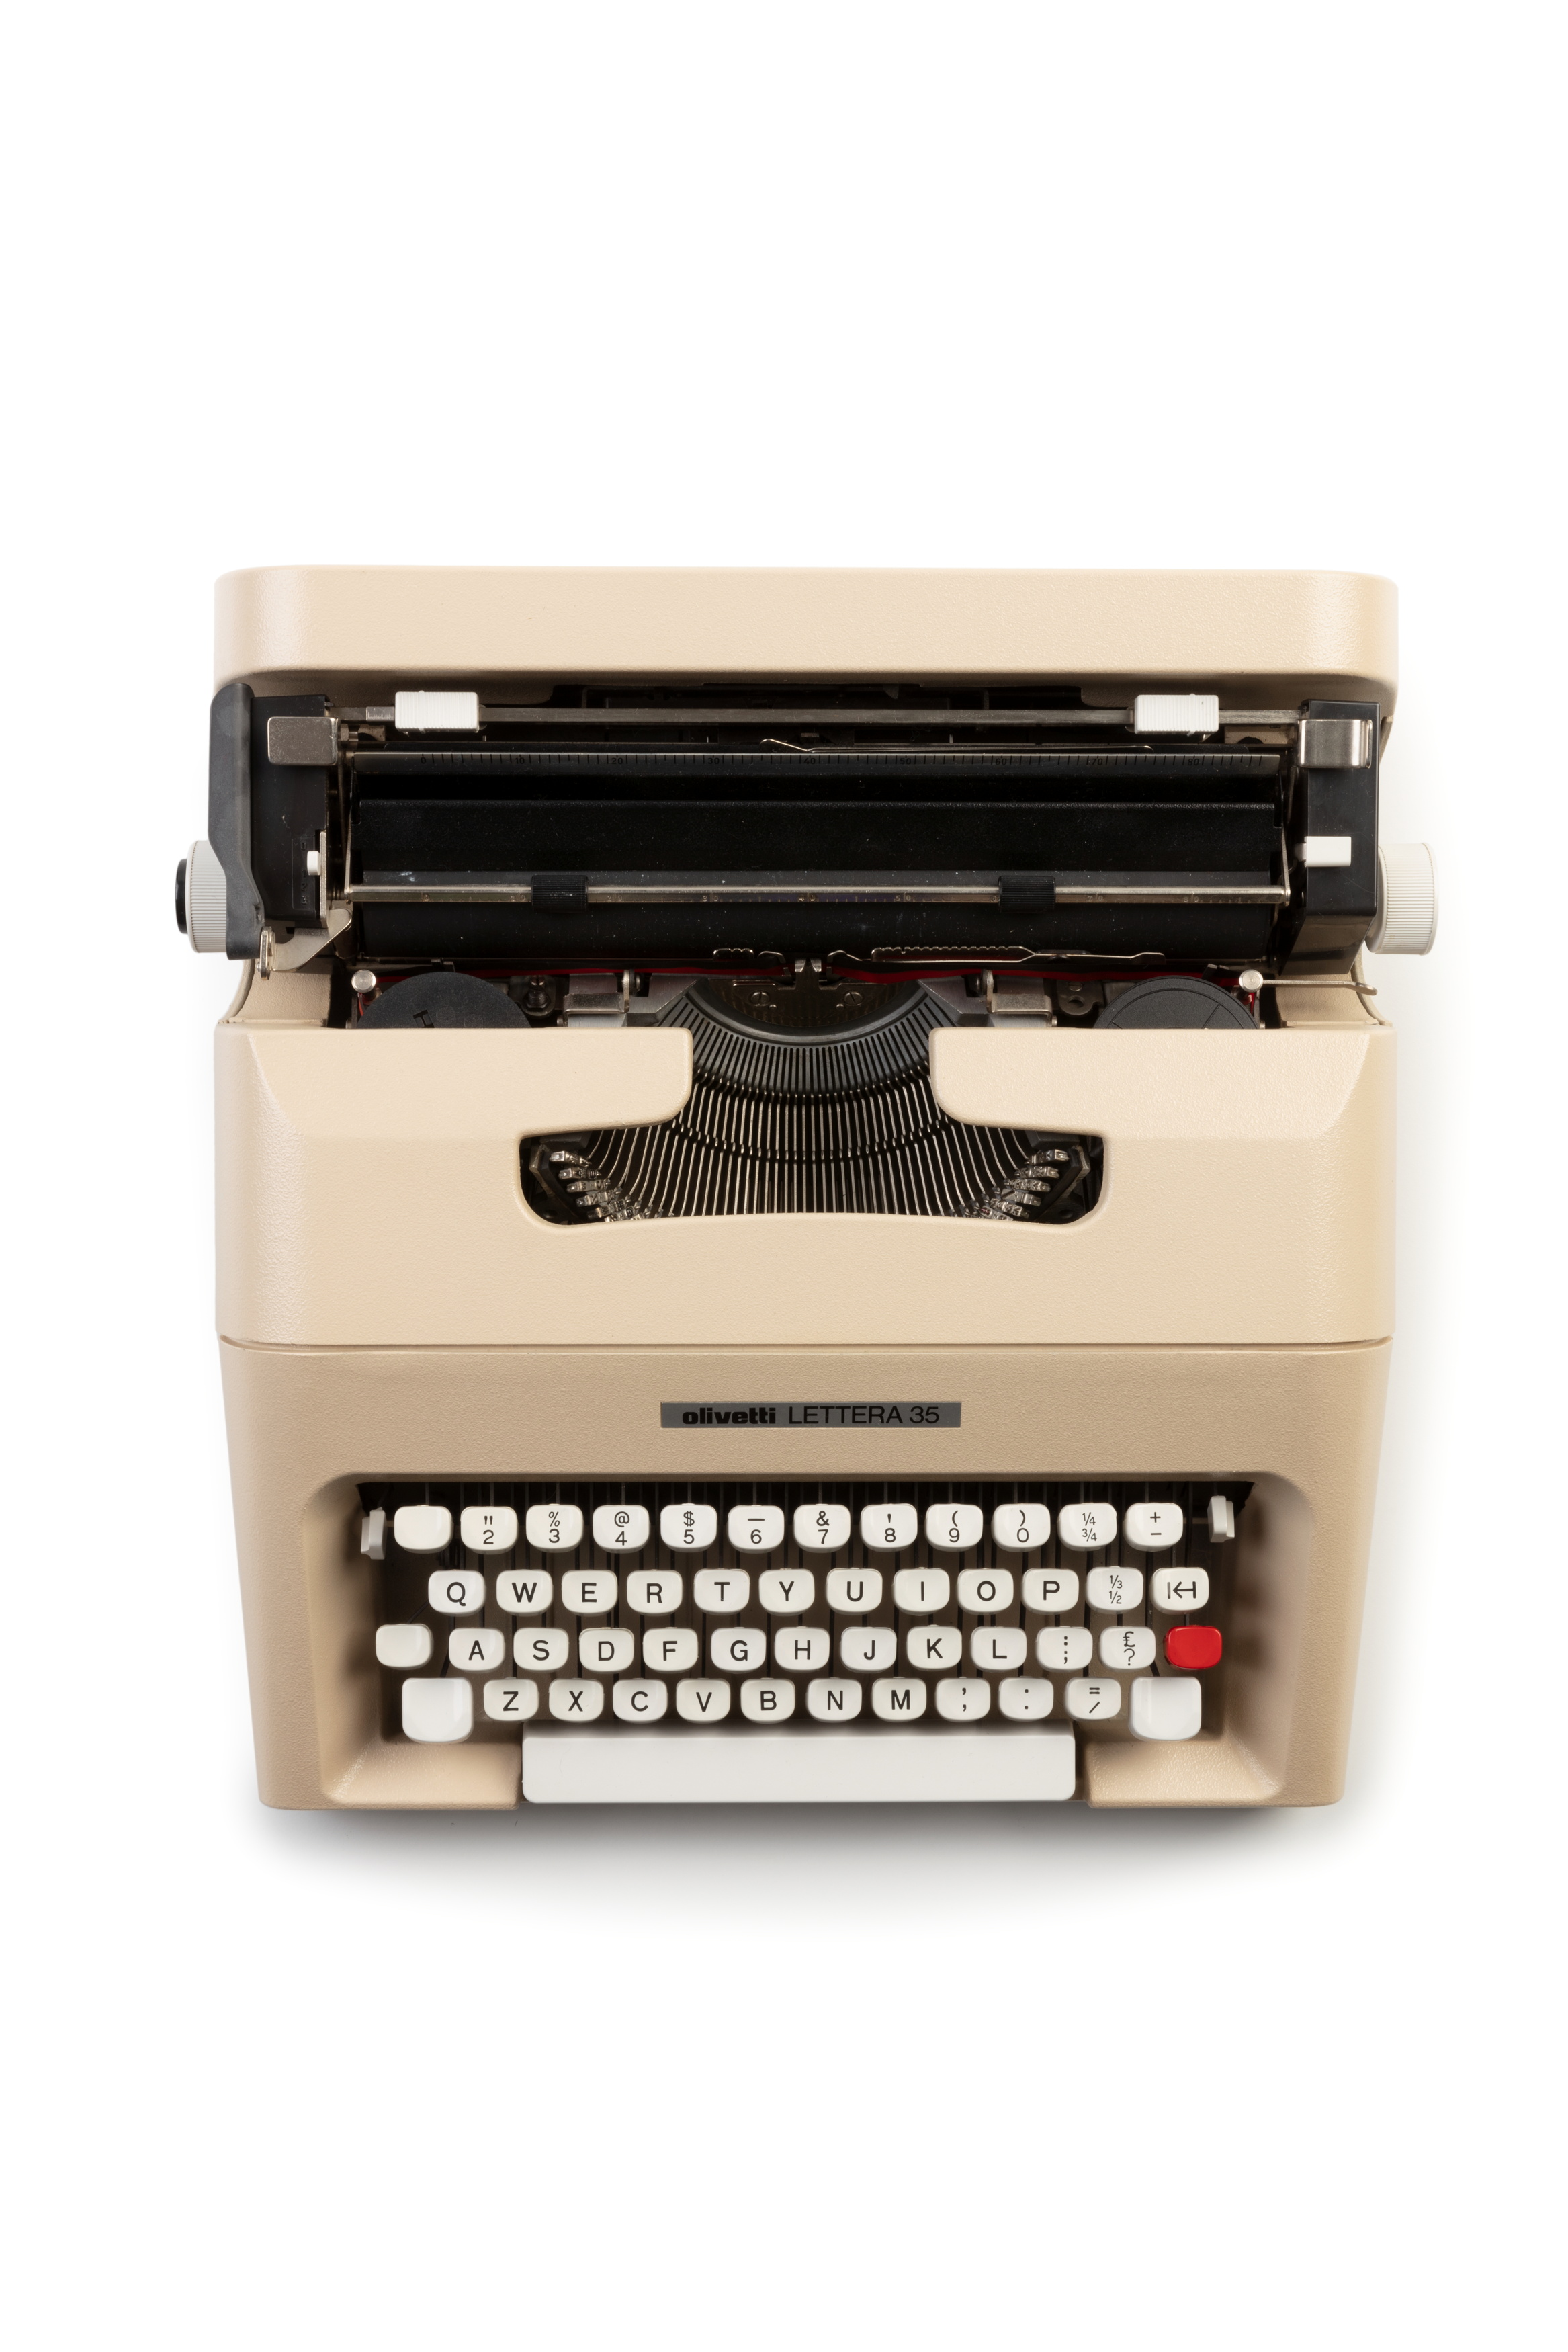 Olivetti Lettera 35 portable typewriter designed by Mario Bellini